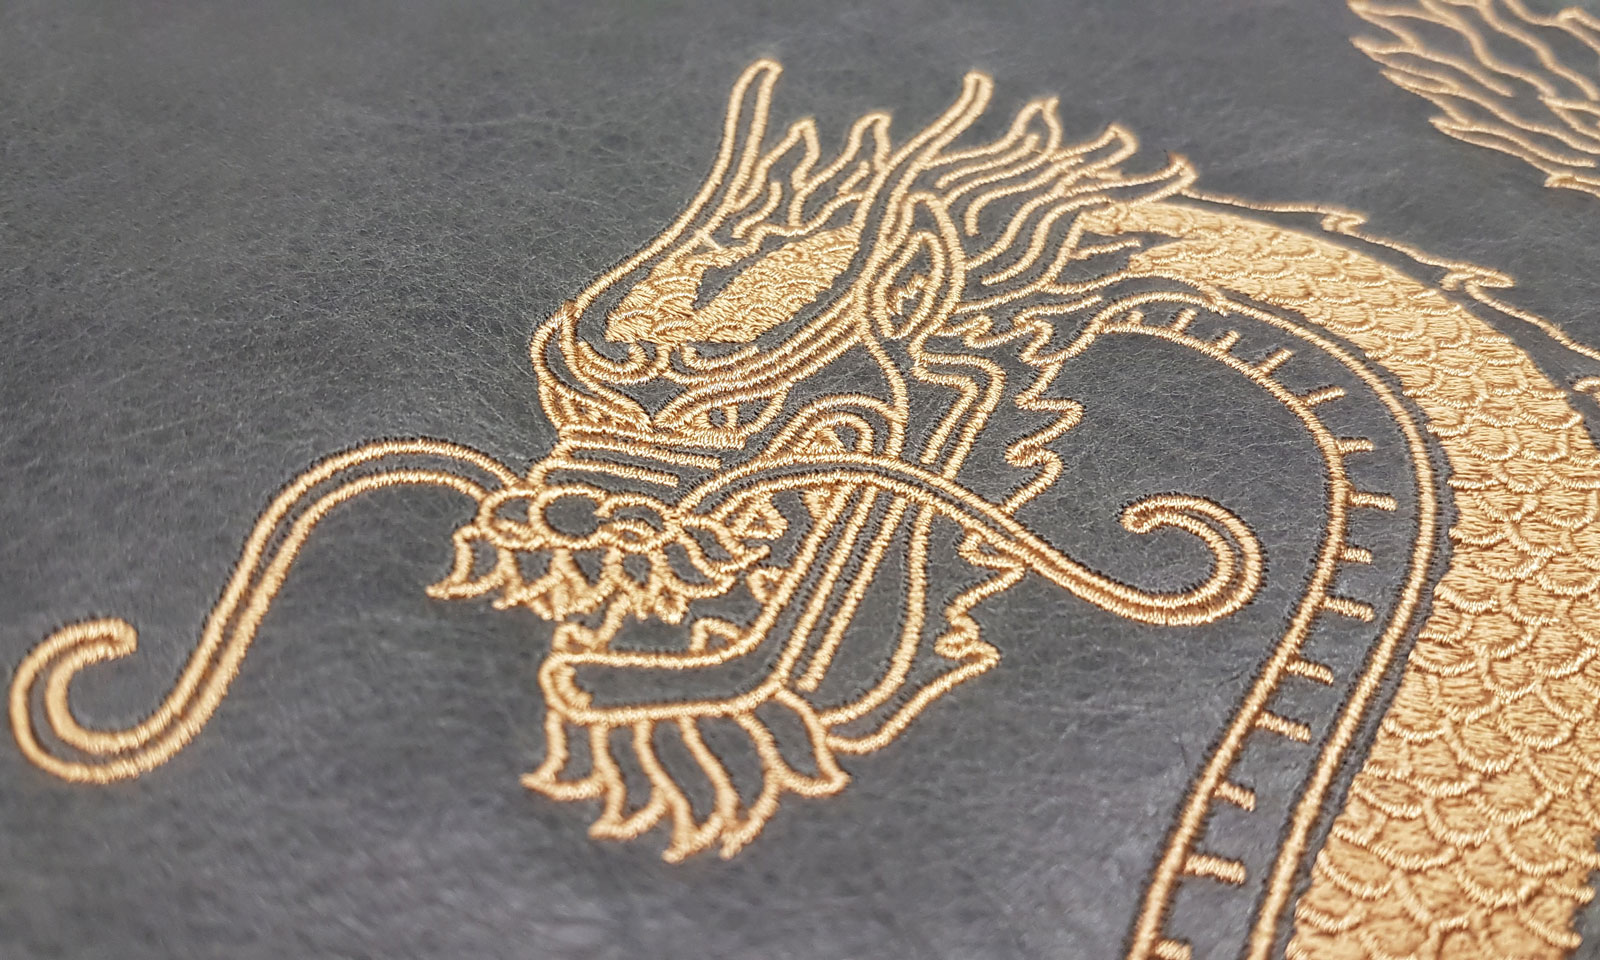 Yarwood Leather's Beautiful Embroidery